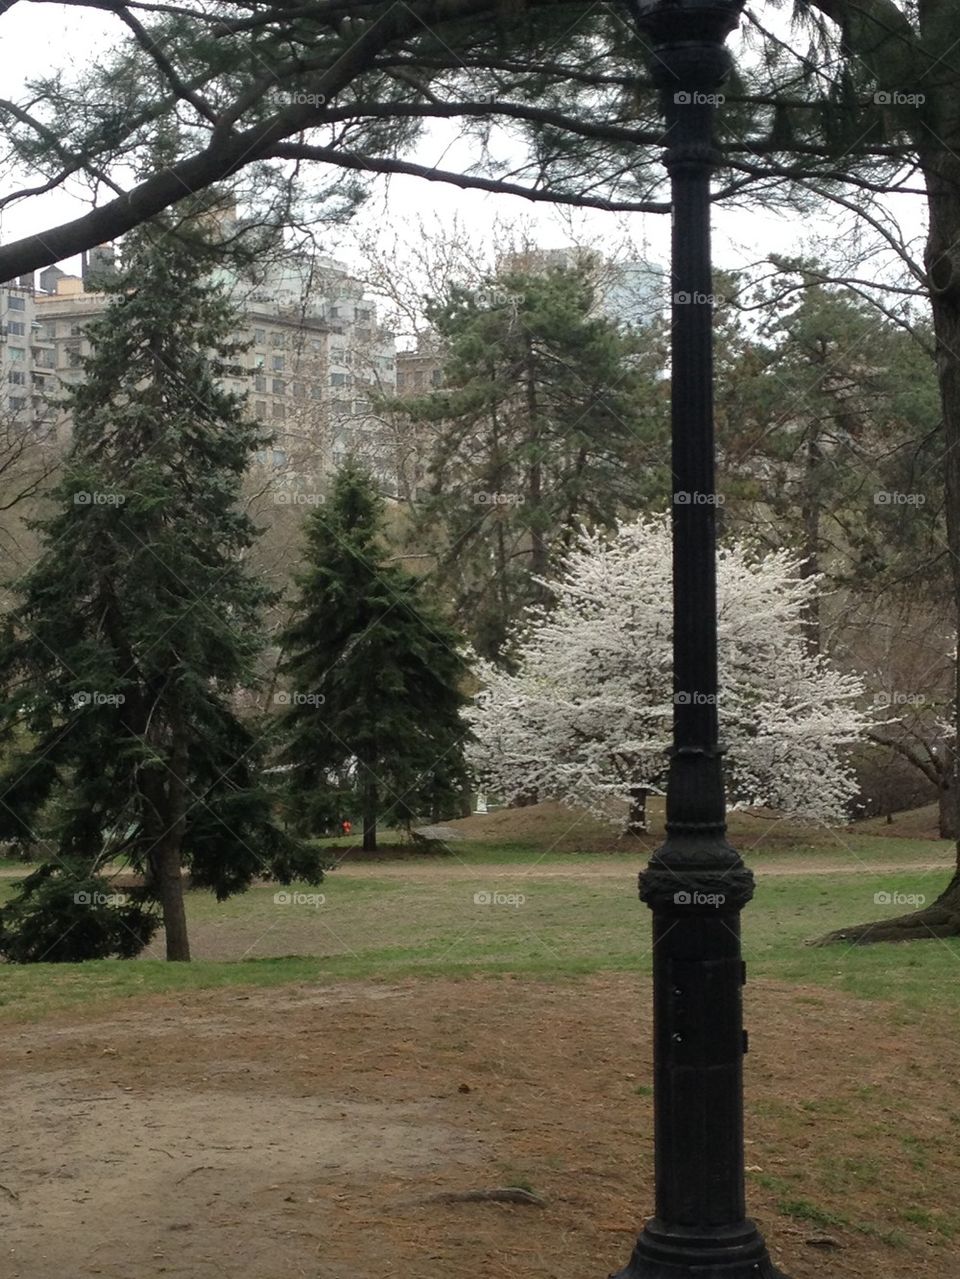 Spring time in Central Park